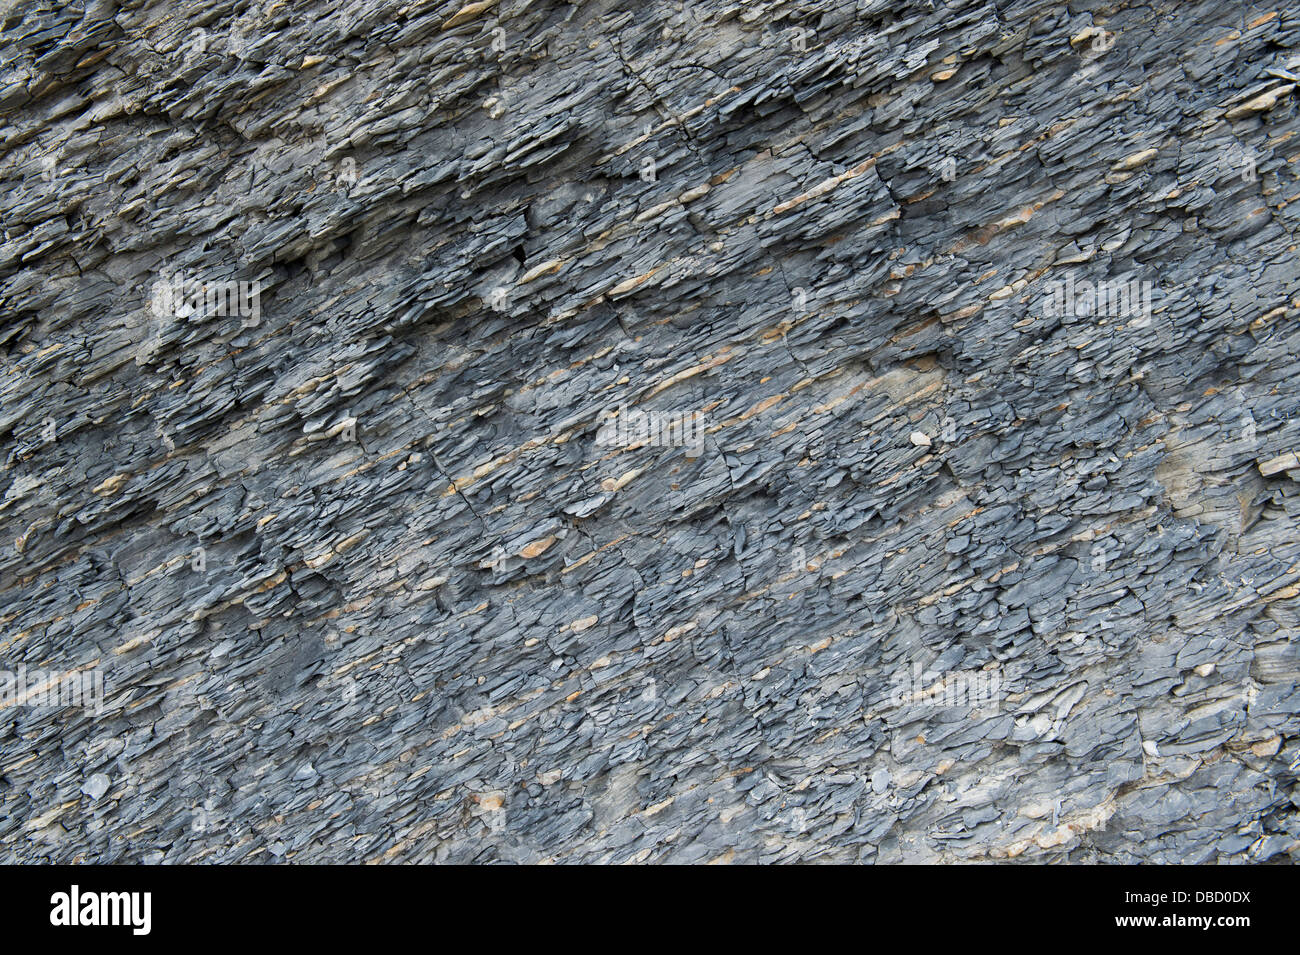 Shale rock. Northumberland Coastline, Englandgeological Stock Photo